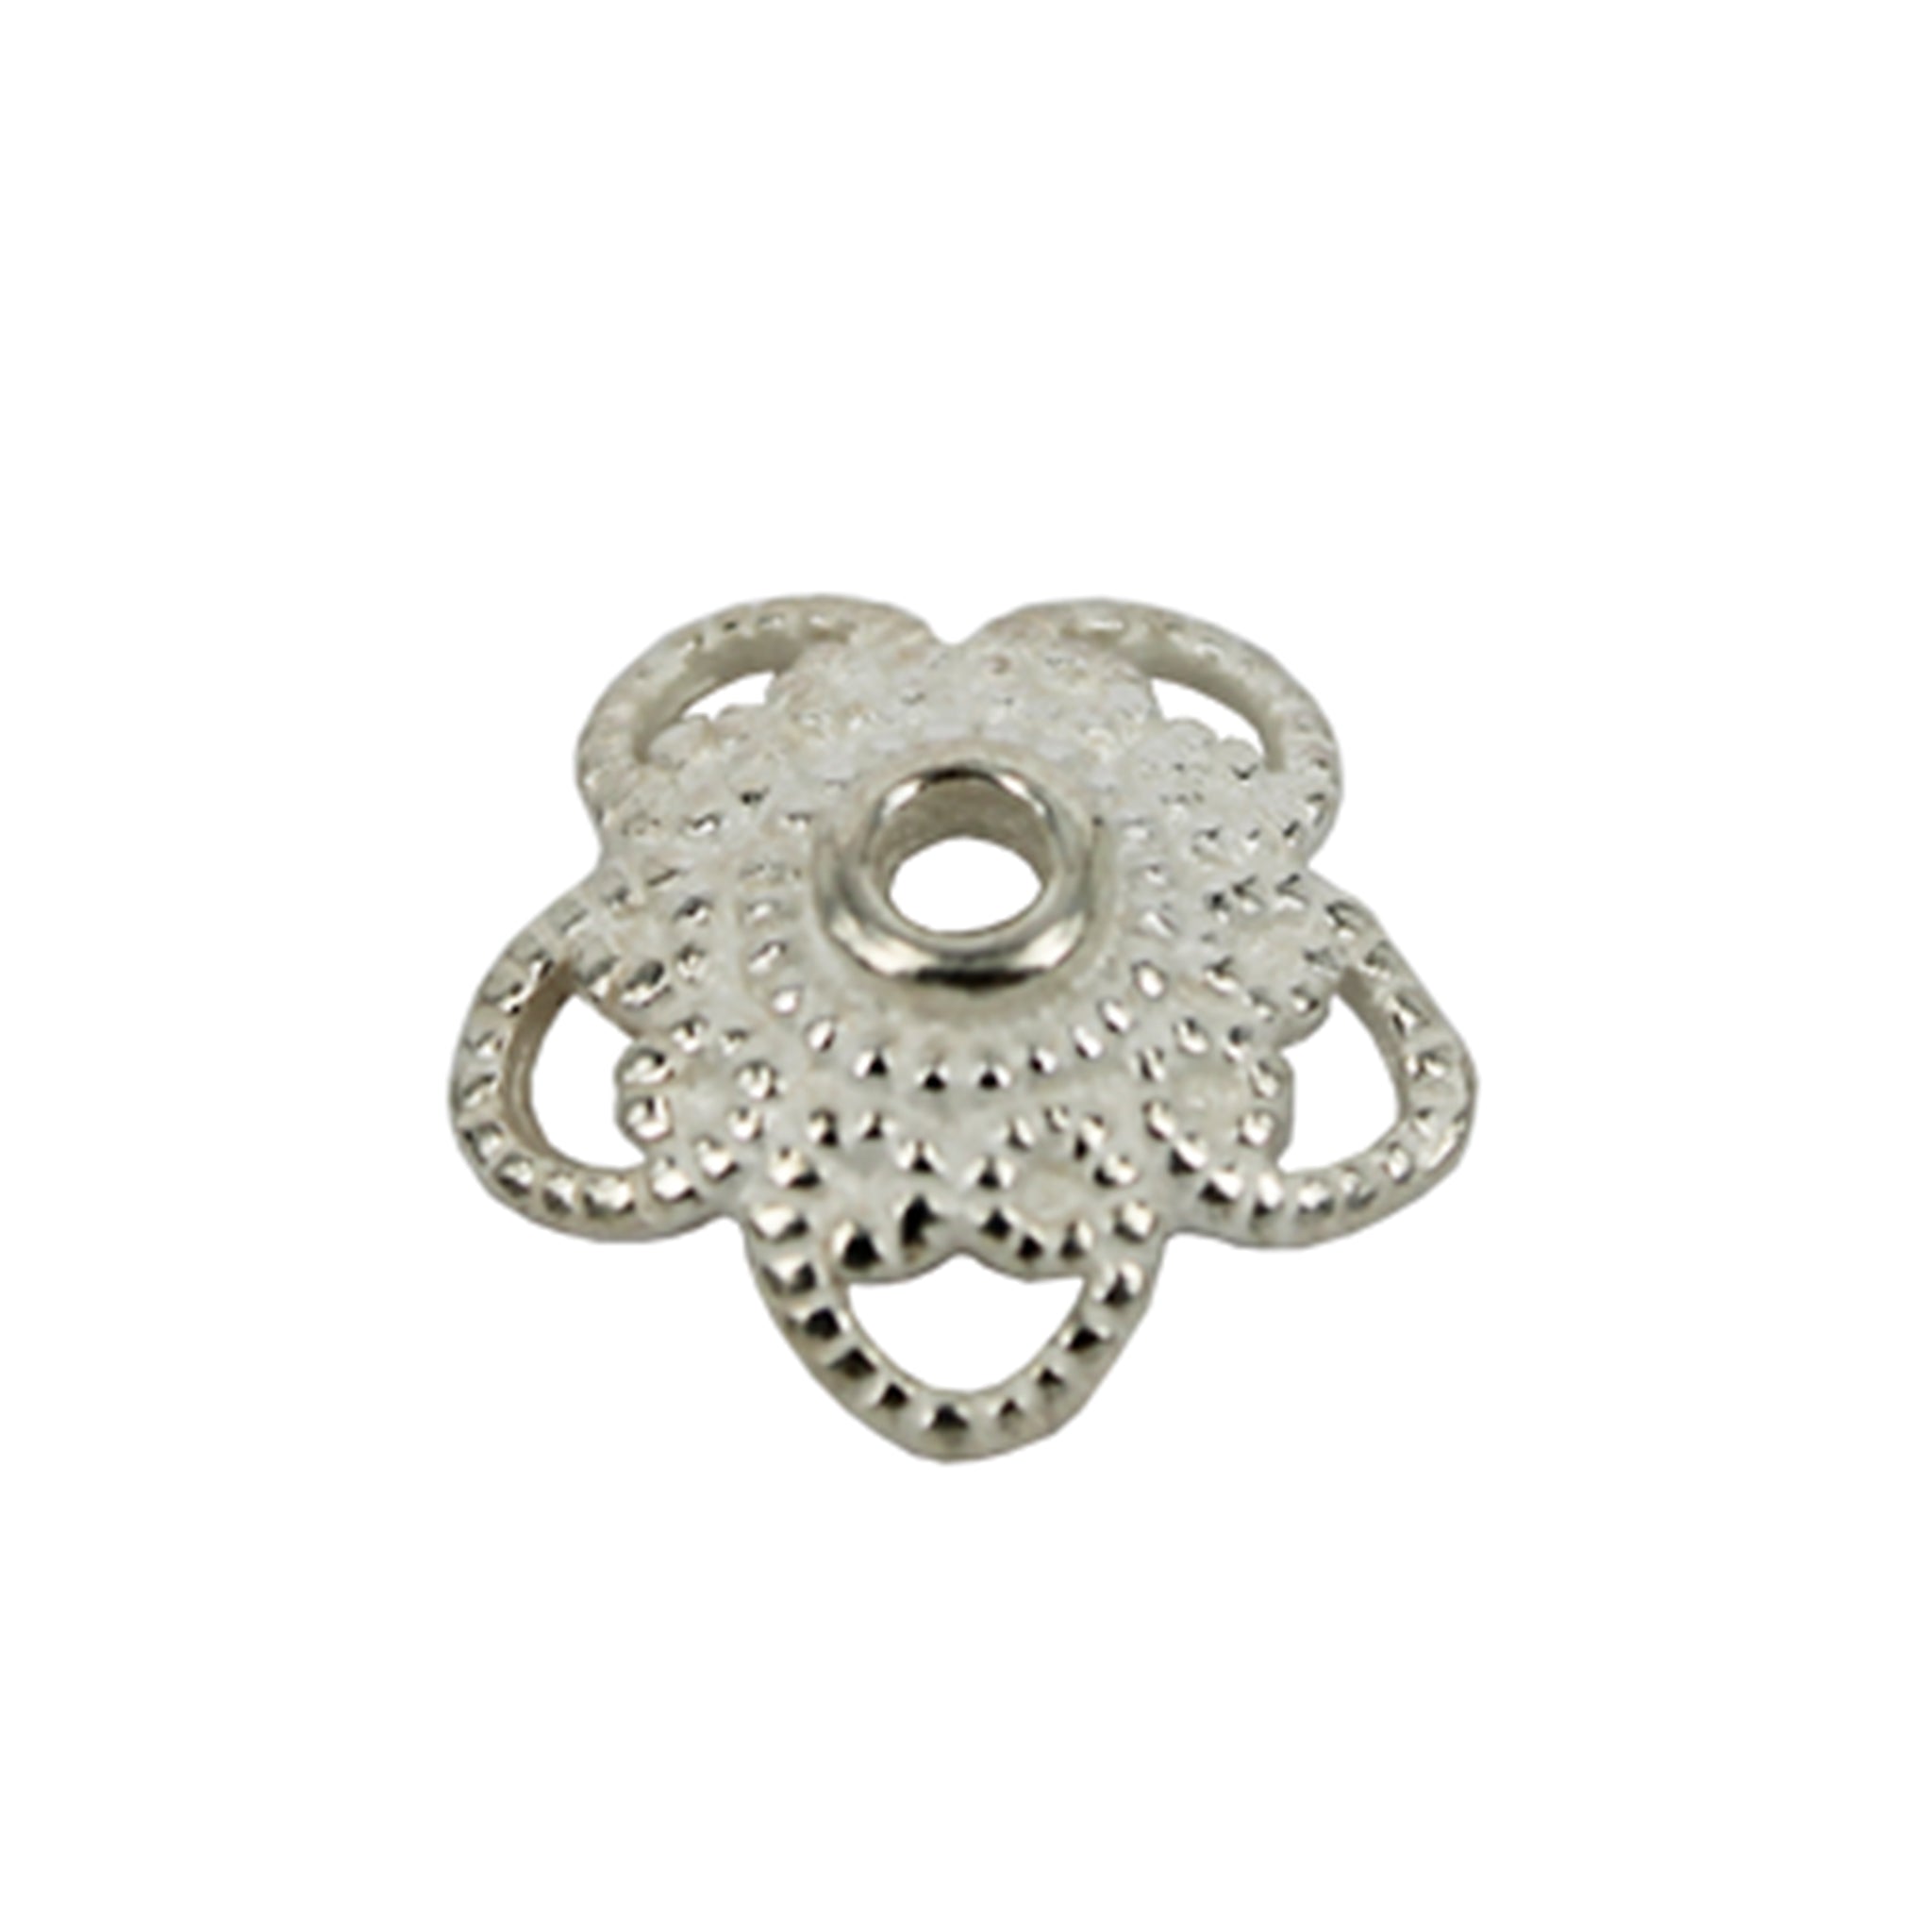 Flower Bead Cap in Sterling Silver 11.7mm